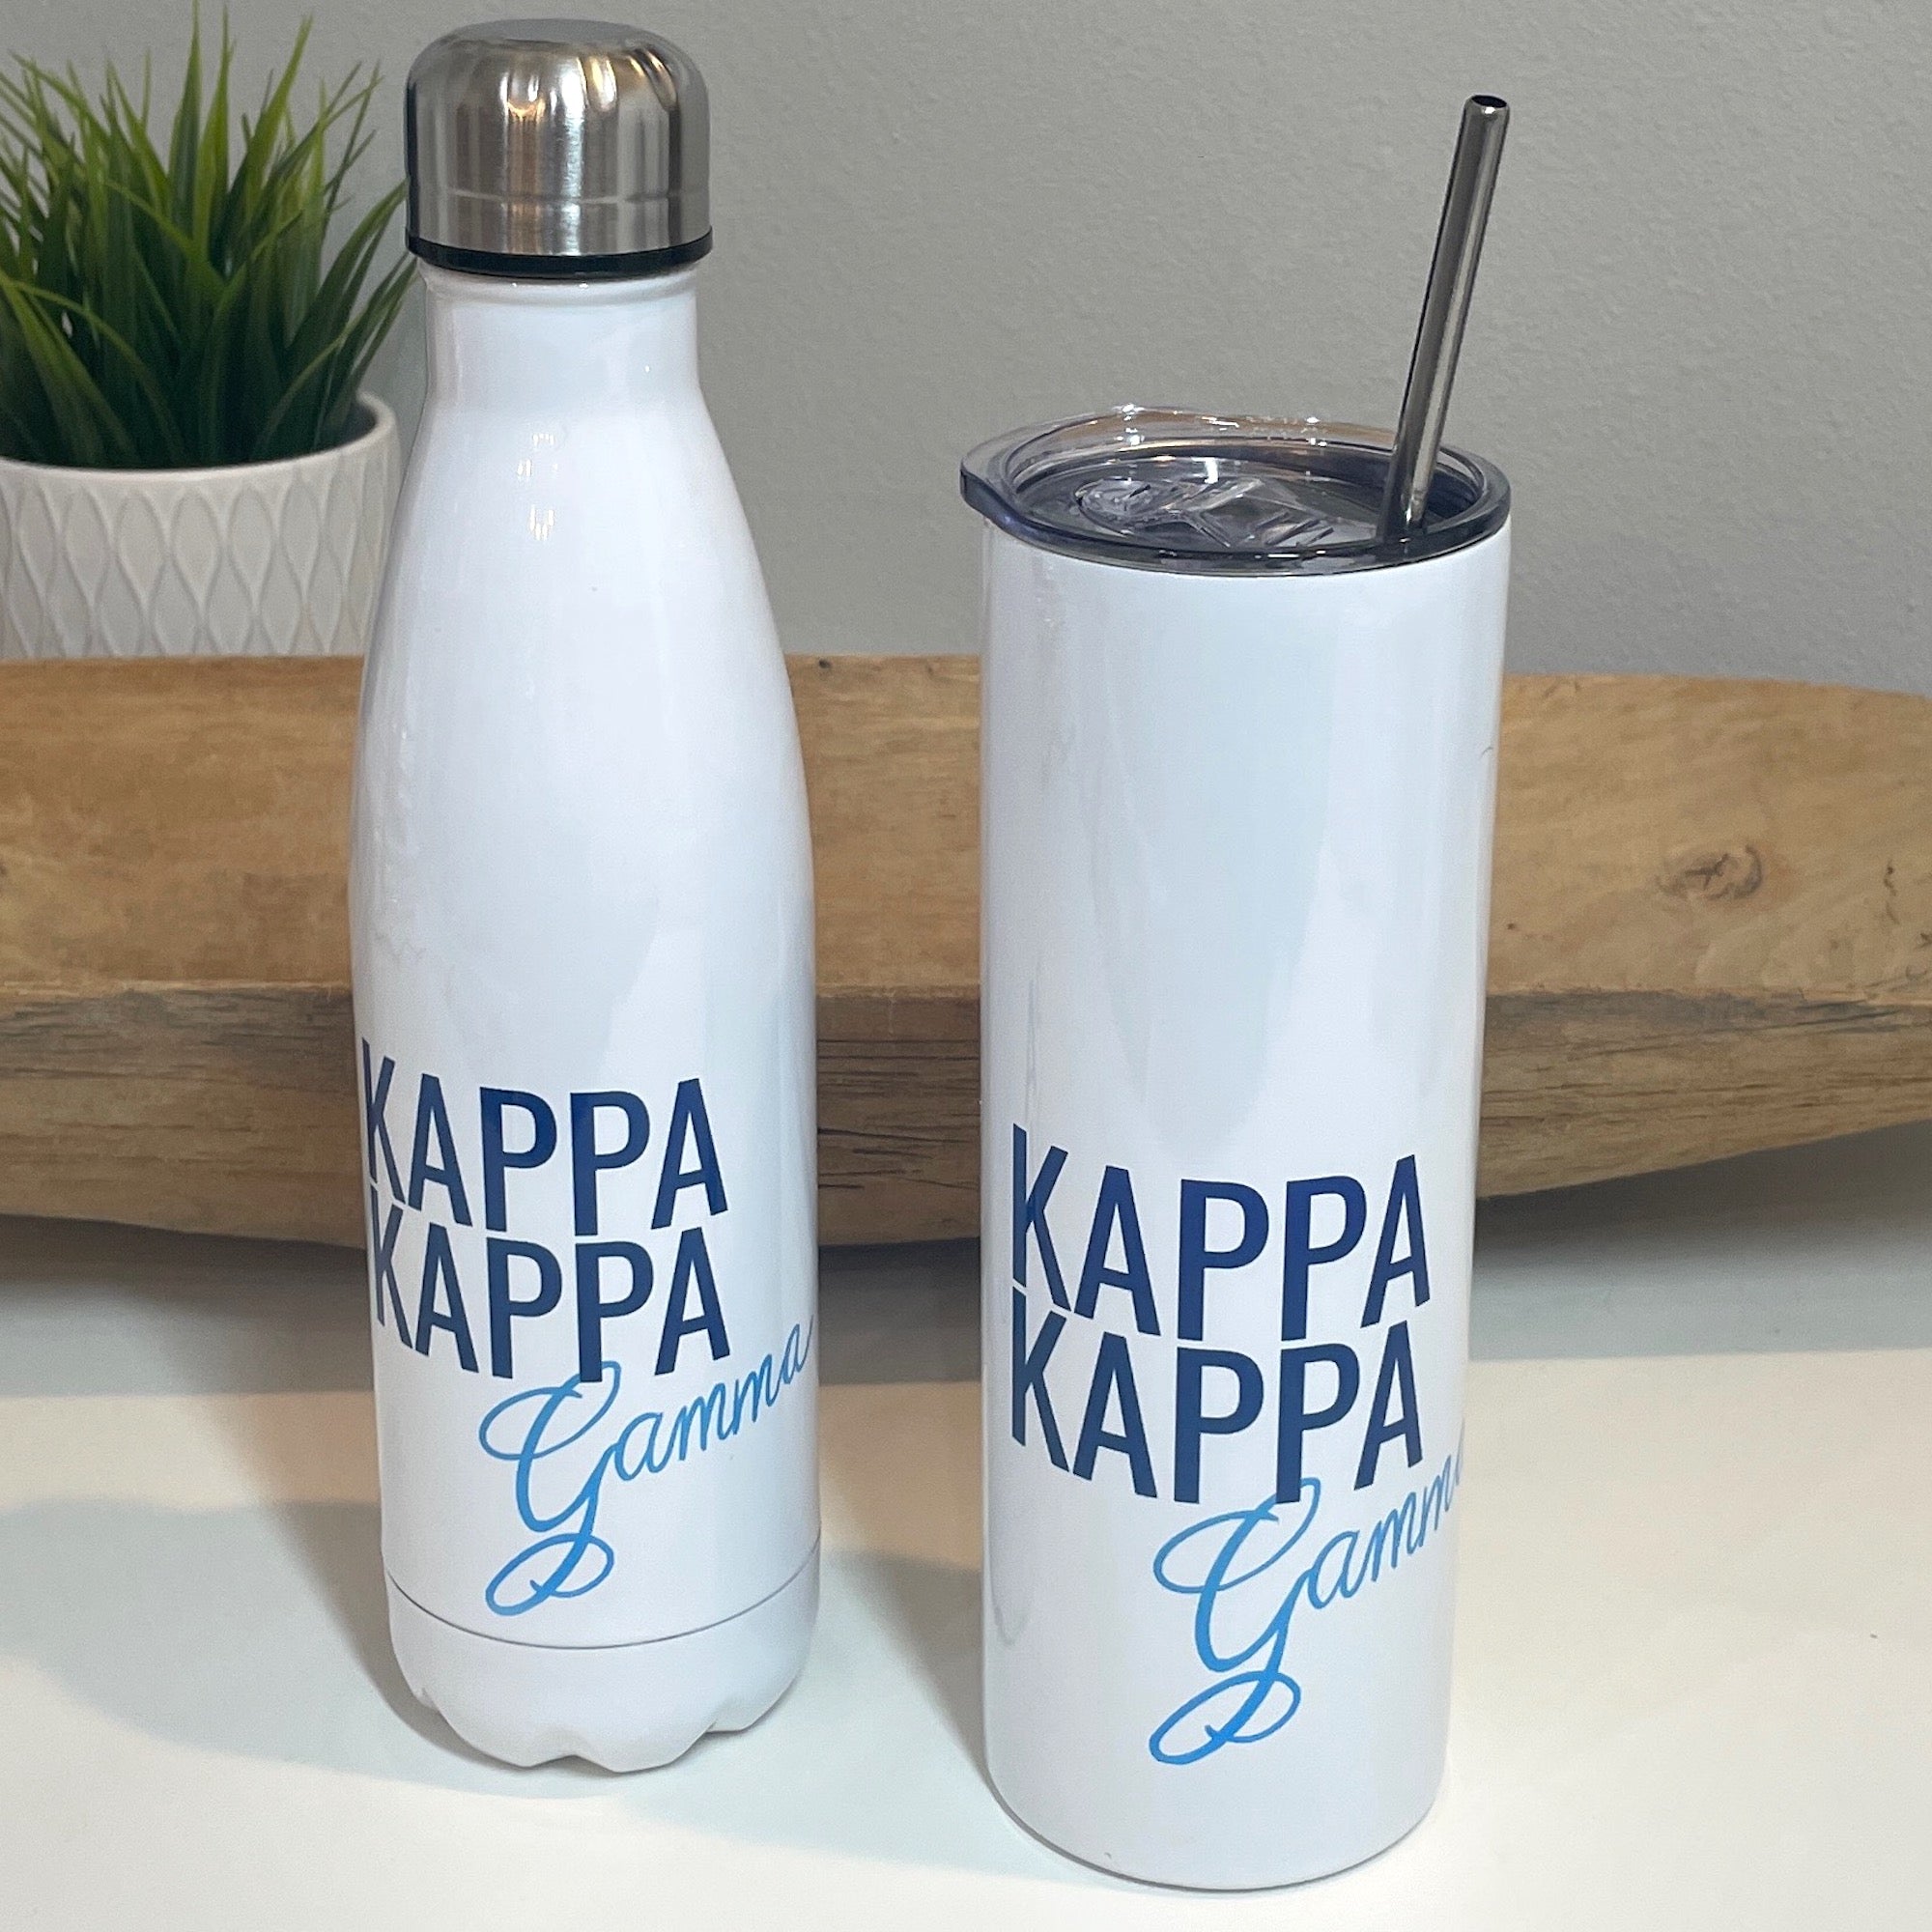 Kappa Kappa Gamma Water Bottle or Skinny Tumbler